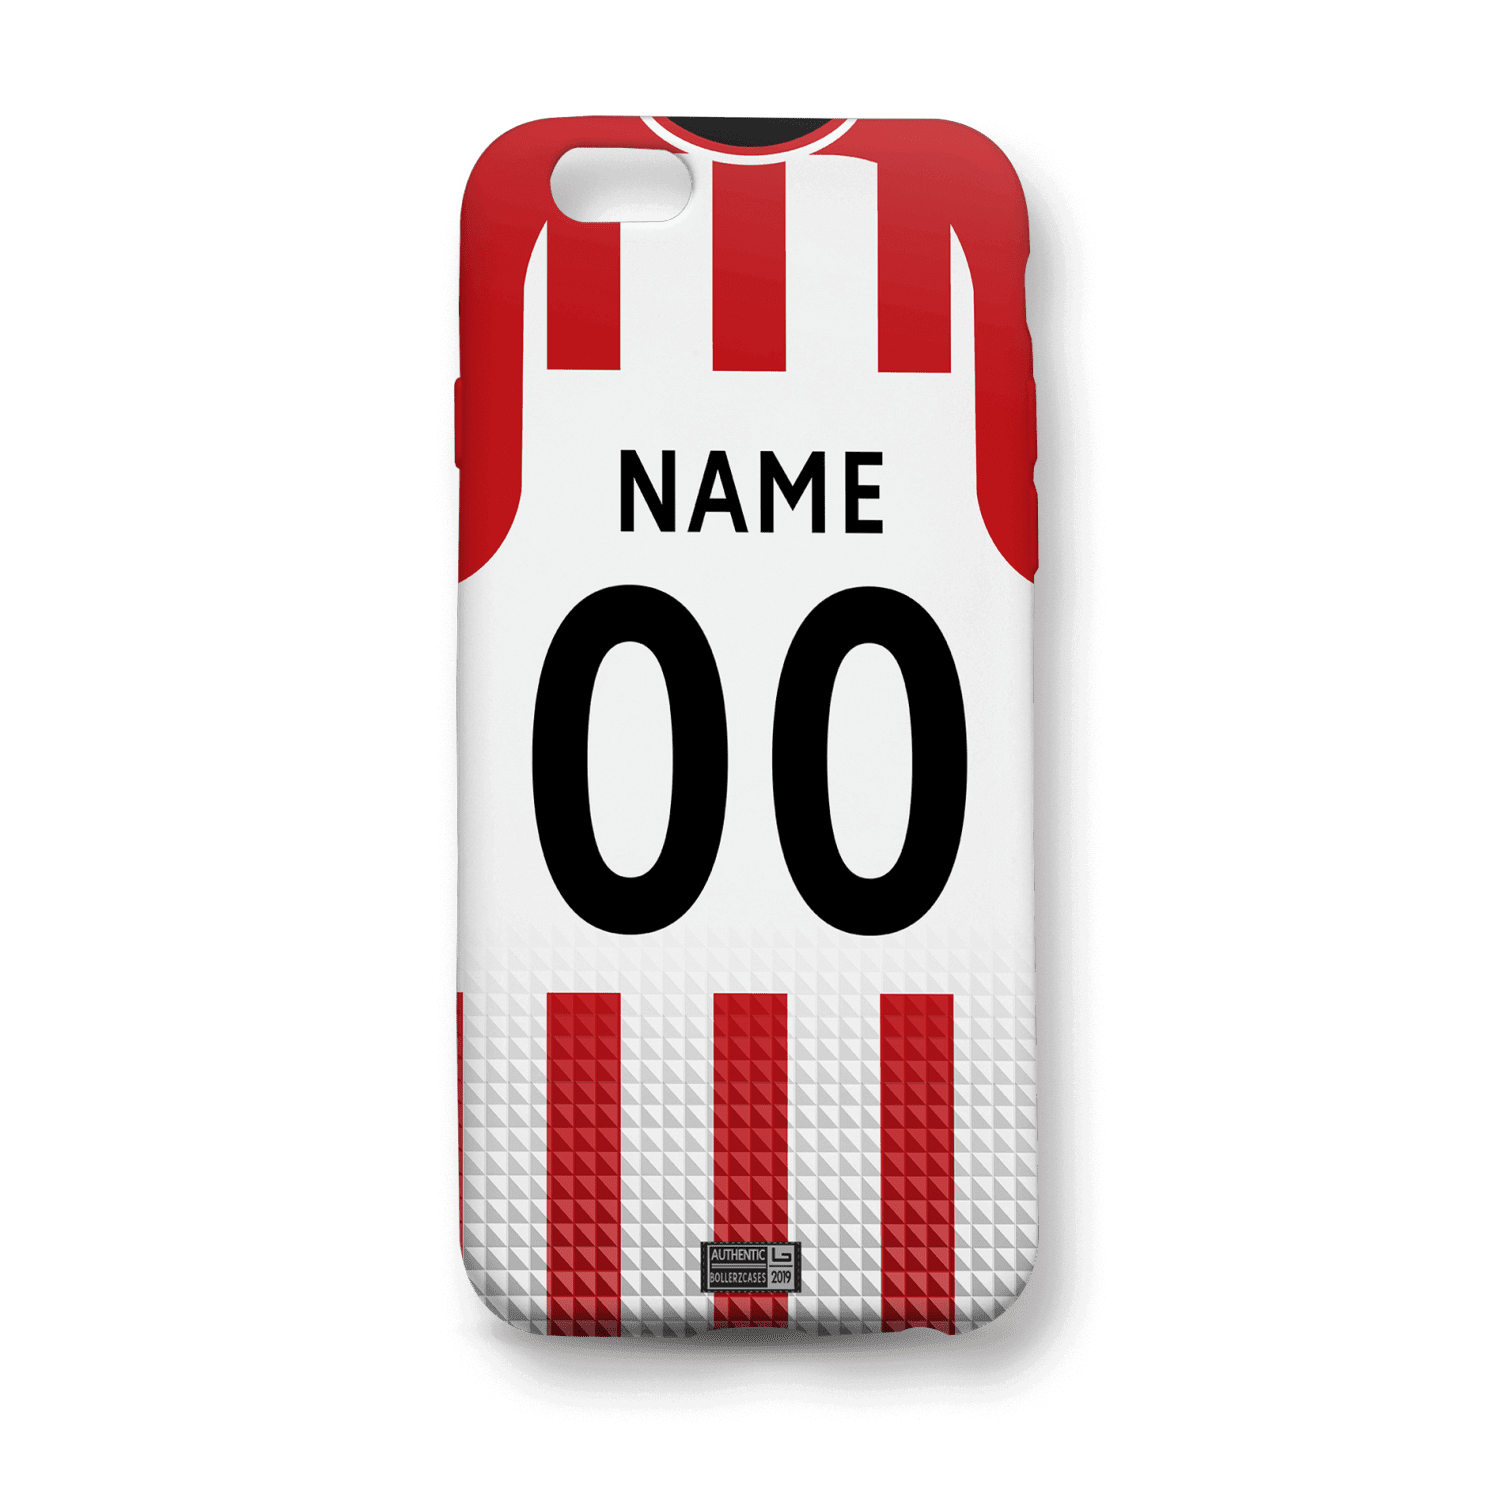 Sheffield United 19-20 Home kit phone case